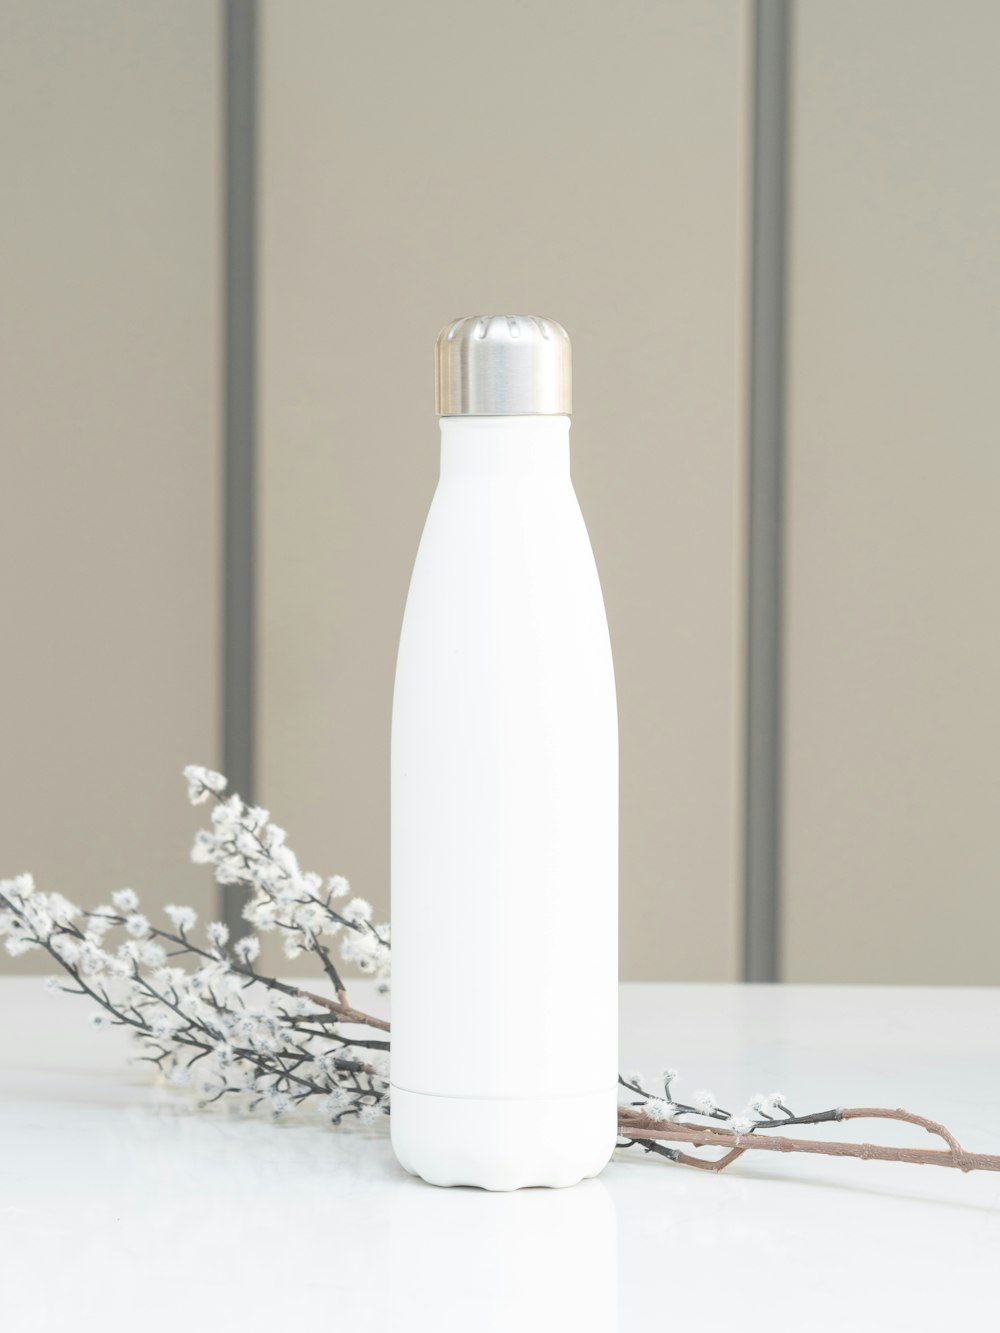 white bottle on white table